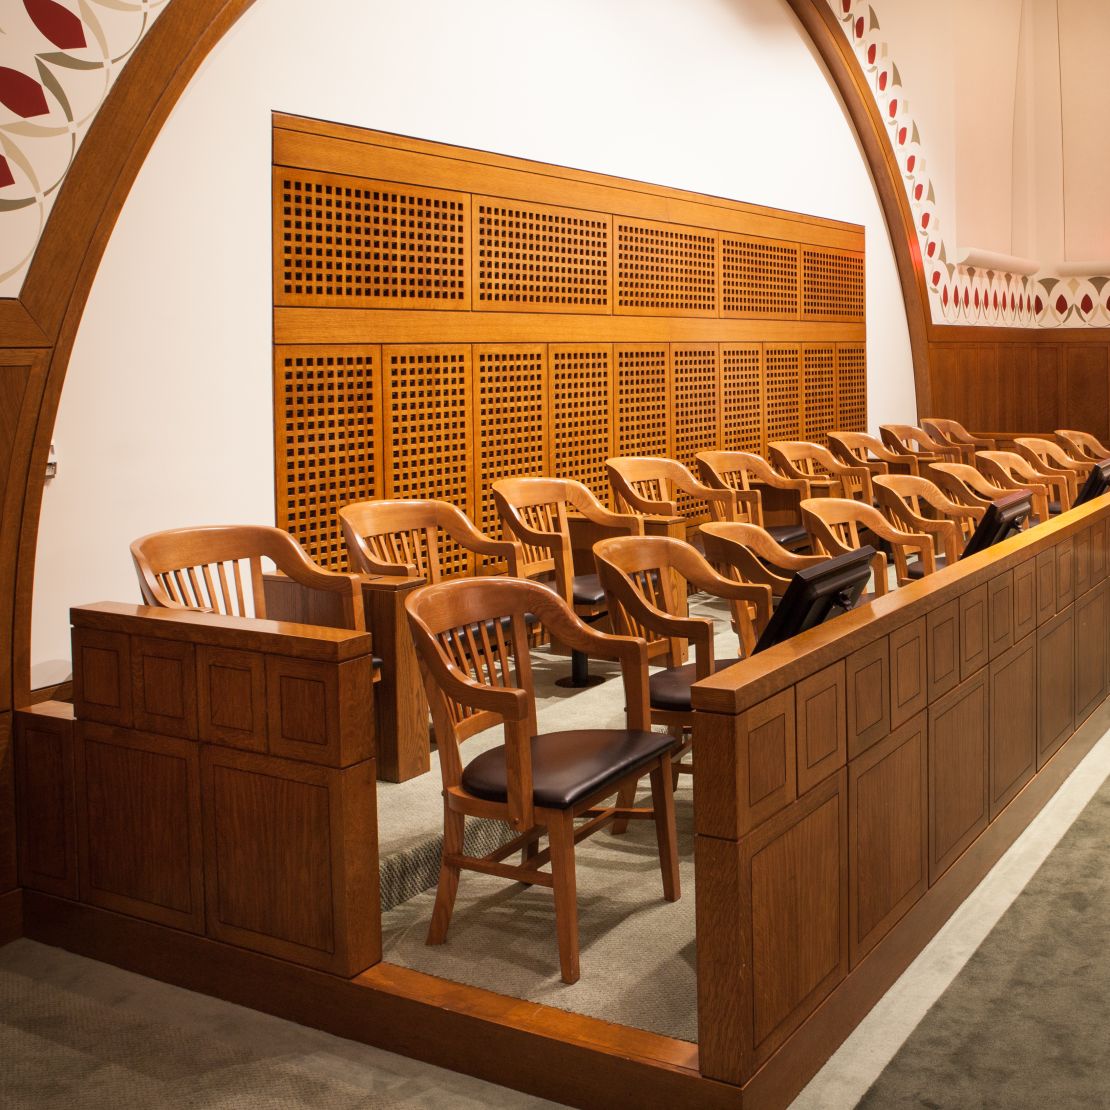 The jury box where 12 people will decide the fate of Boston bombing defendant Dzhokhar Tsarnaev.